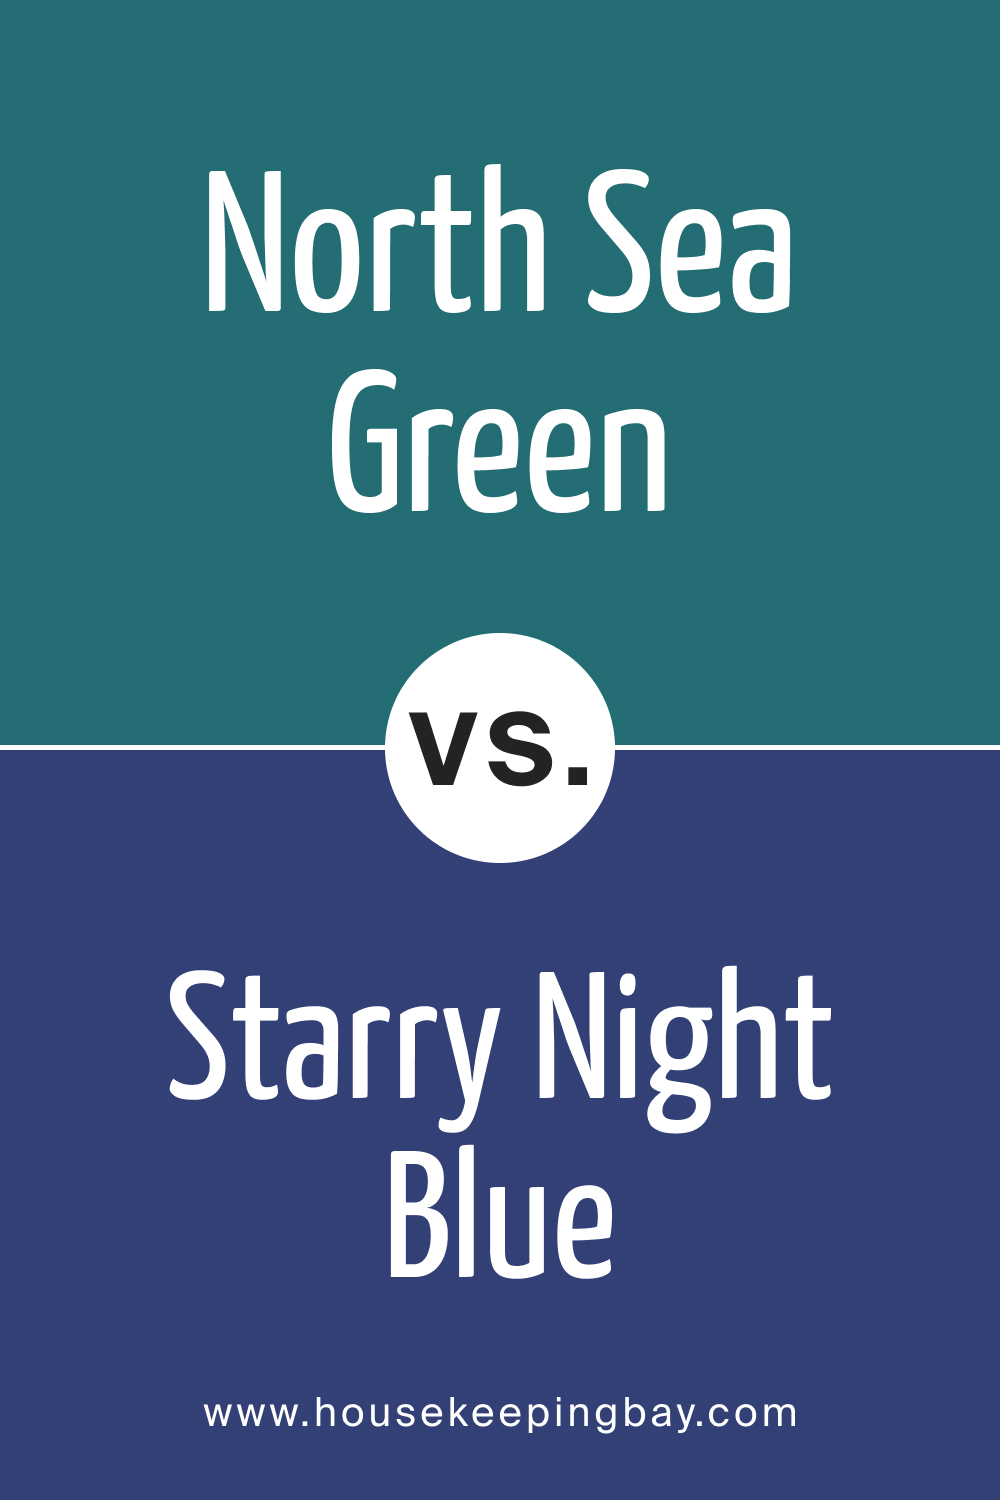 North Sea Green 2053 30 vs. Starry Night Blue 2067 20